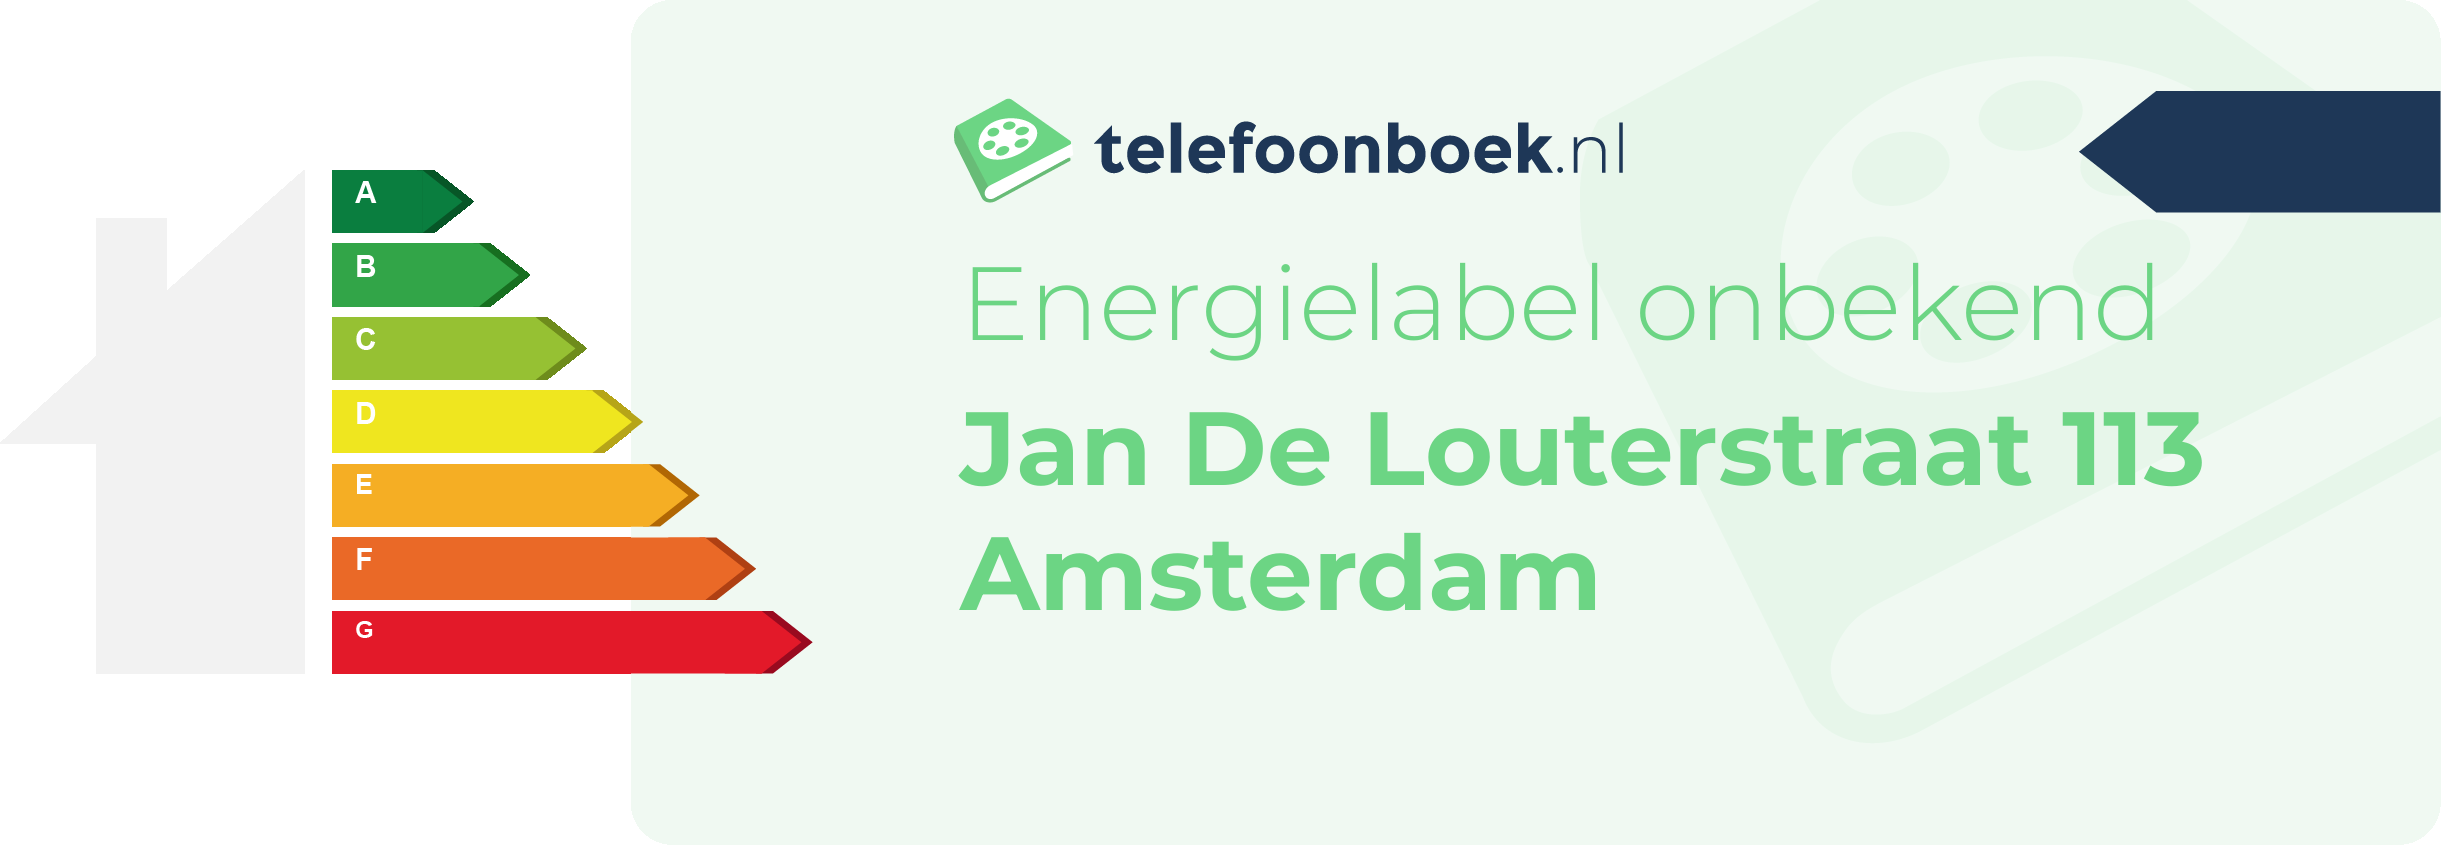 Energielabel Jan De Louterstraat 113 Amsterdam